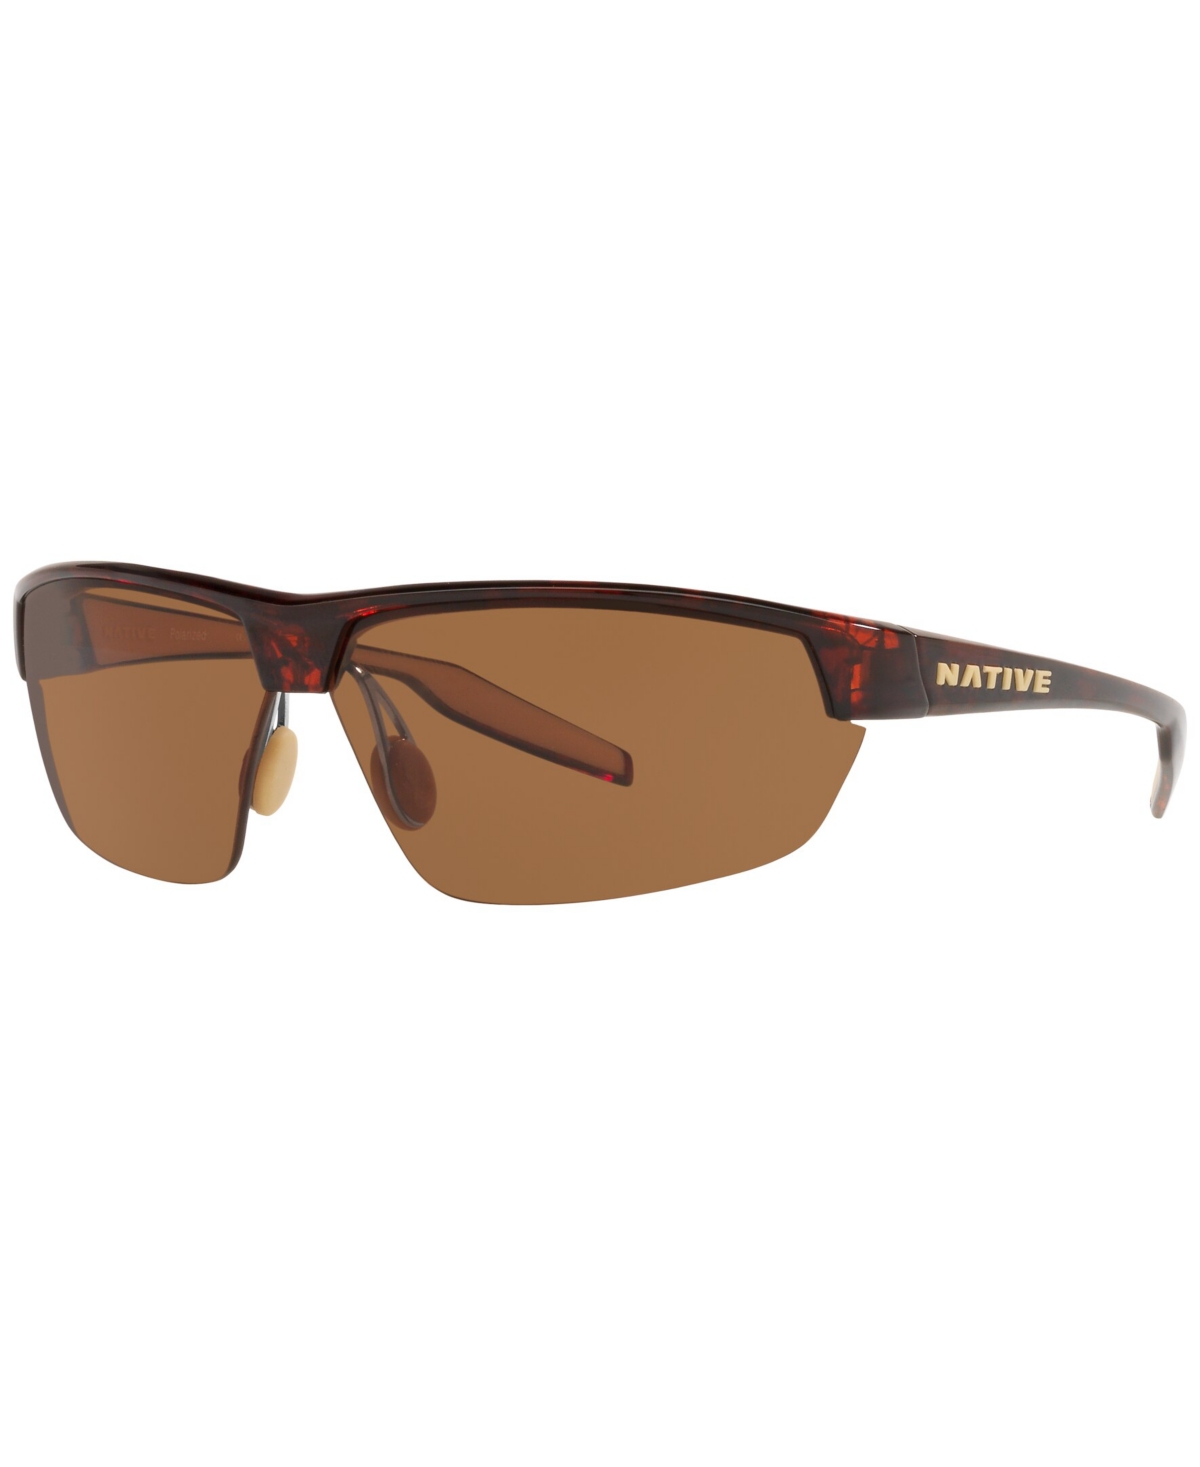 Native Men's Hardtop Ultra Polarized Sunglasses, XD9024 - Maple Tortoise